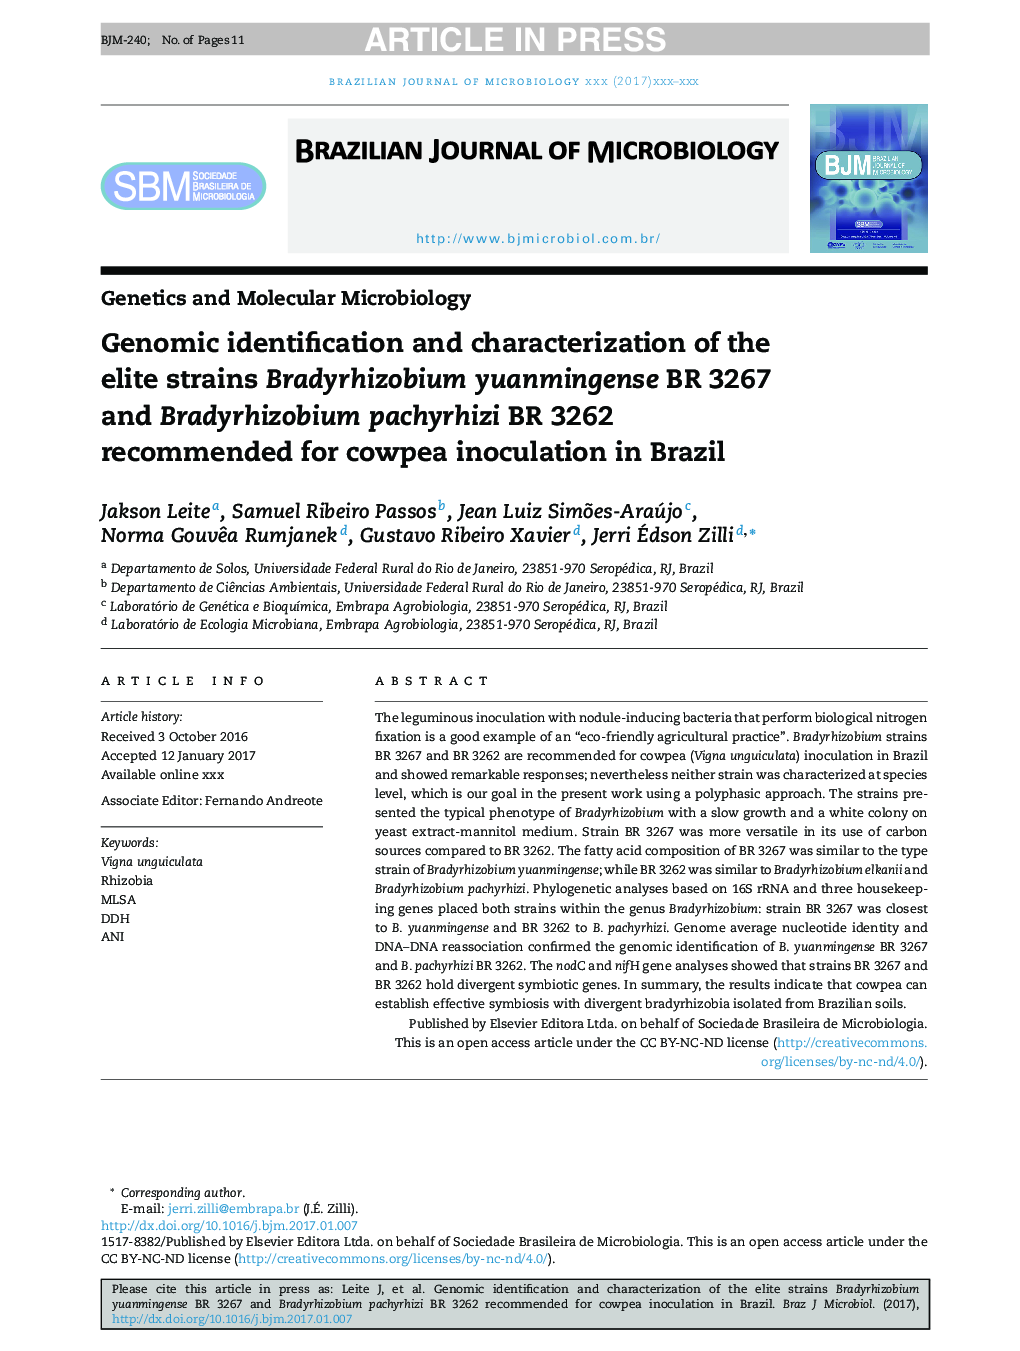 Genomic identification and characterization of the elite strains Bradyrhizobium yuanmingense BR 3267 and Bradyrhizobium pachyrhizi BR 3262 recommended for cowpea inoculation in Brazil